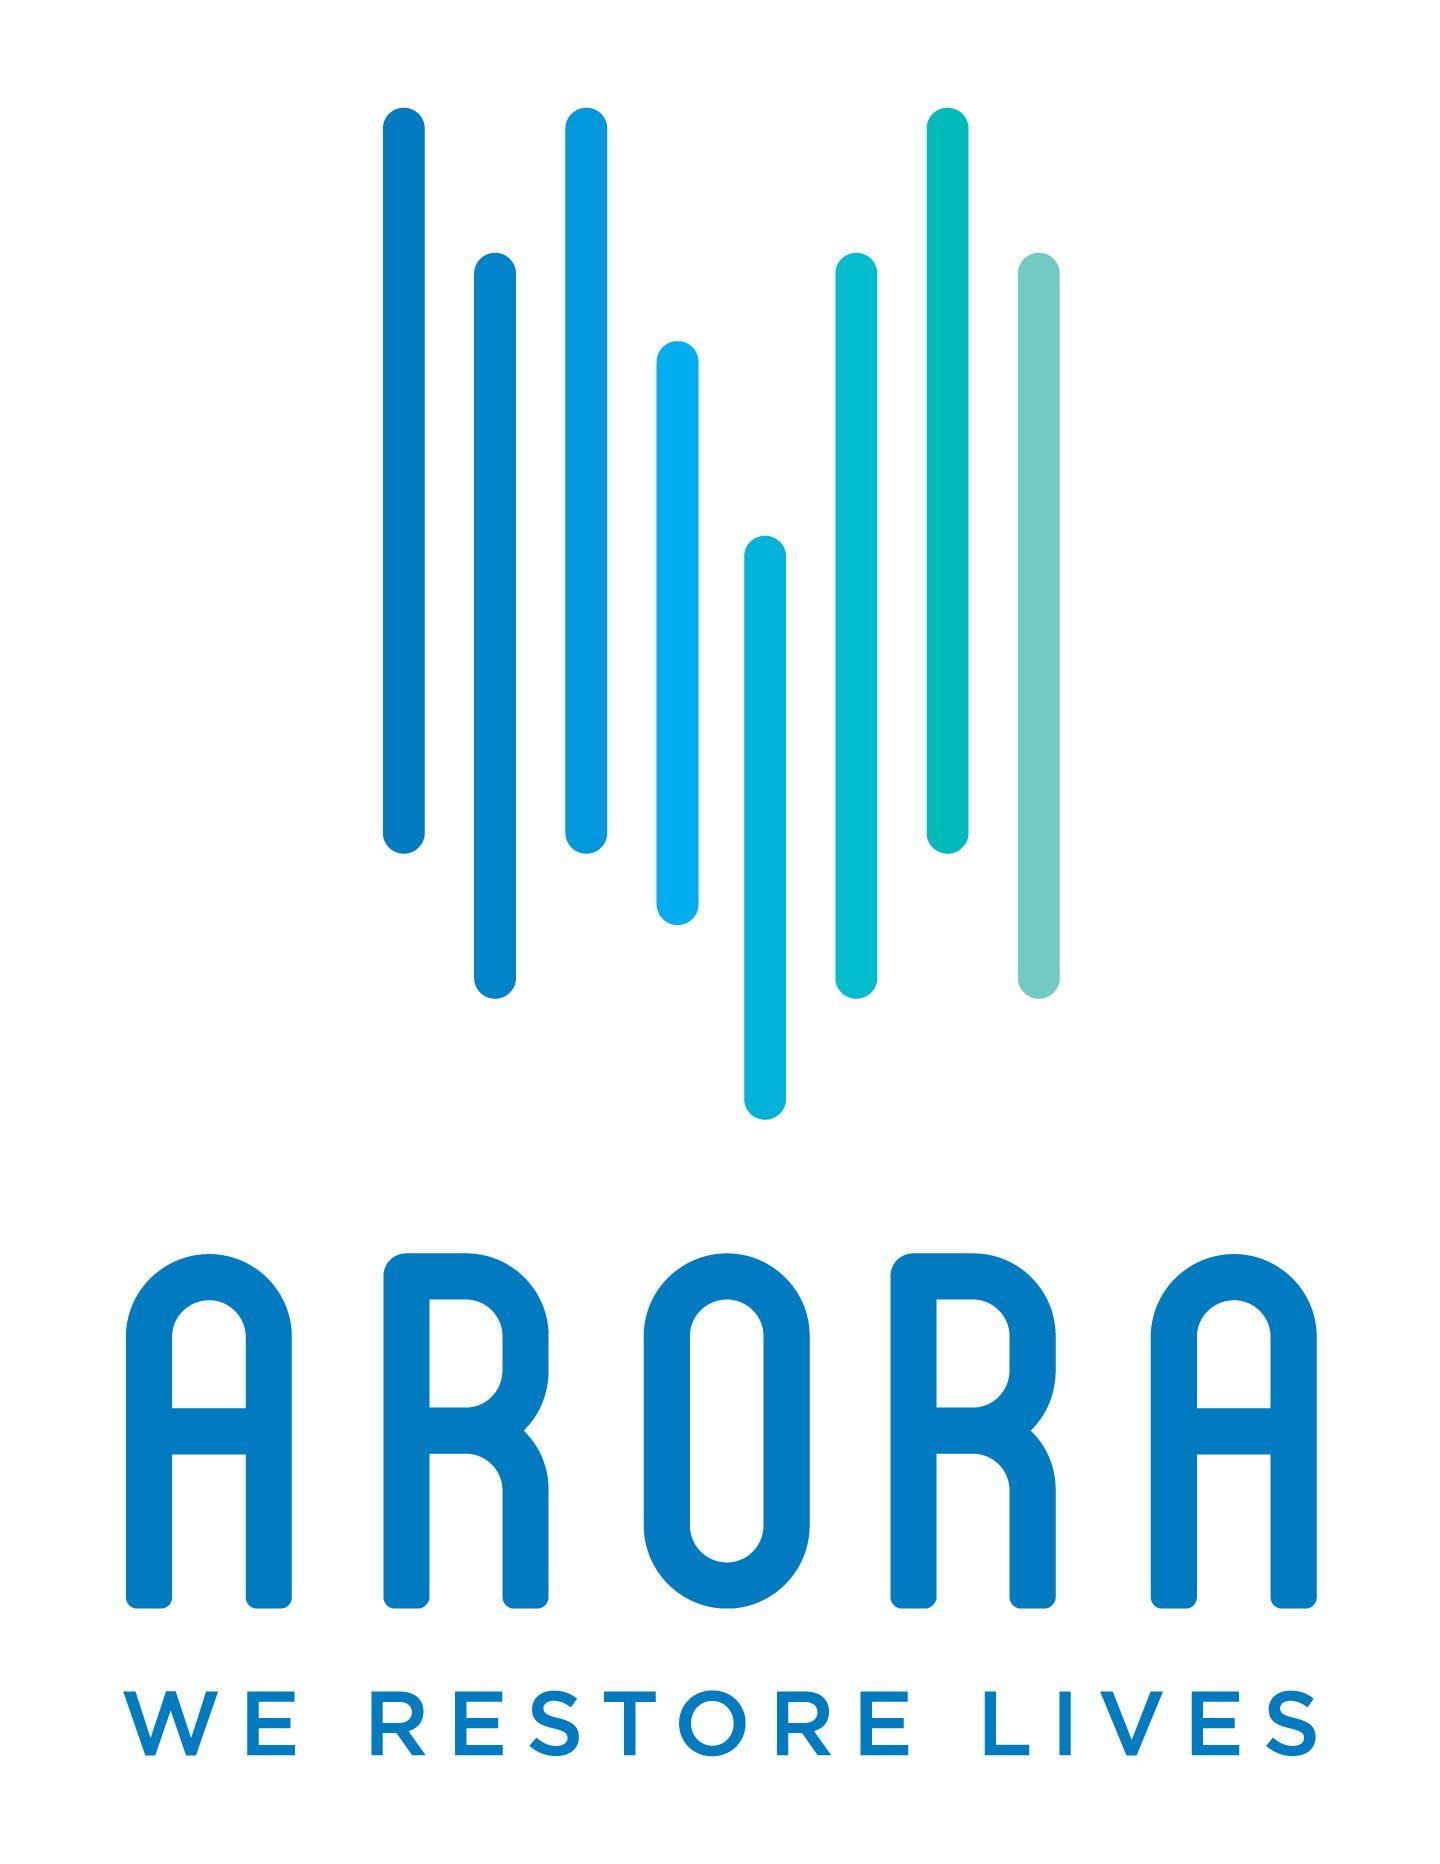 ARORA - Arkansas Regional Organ Recovery Agency